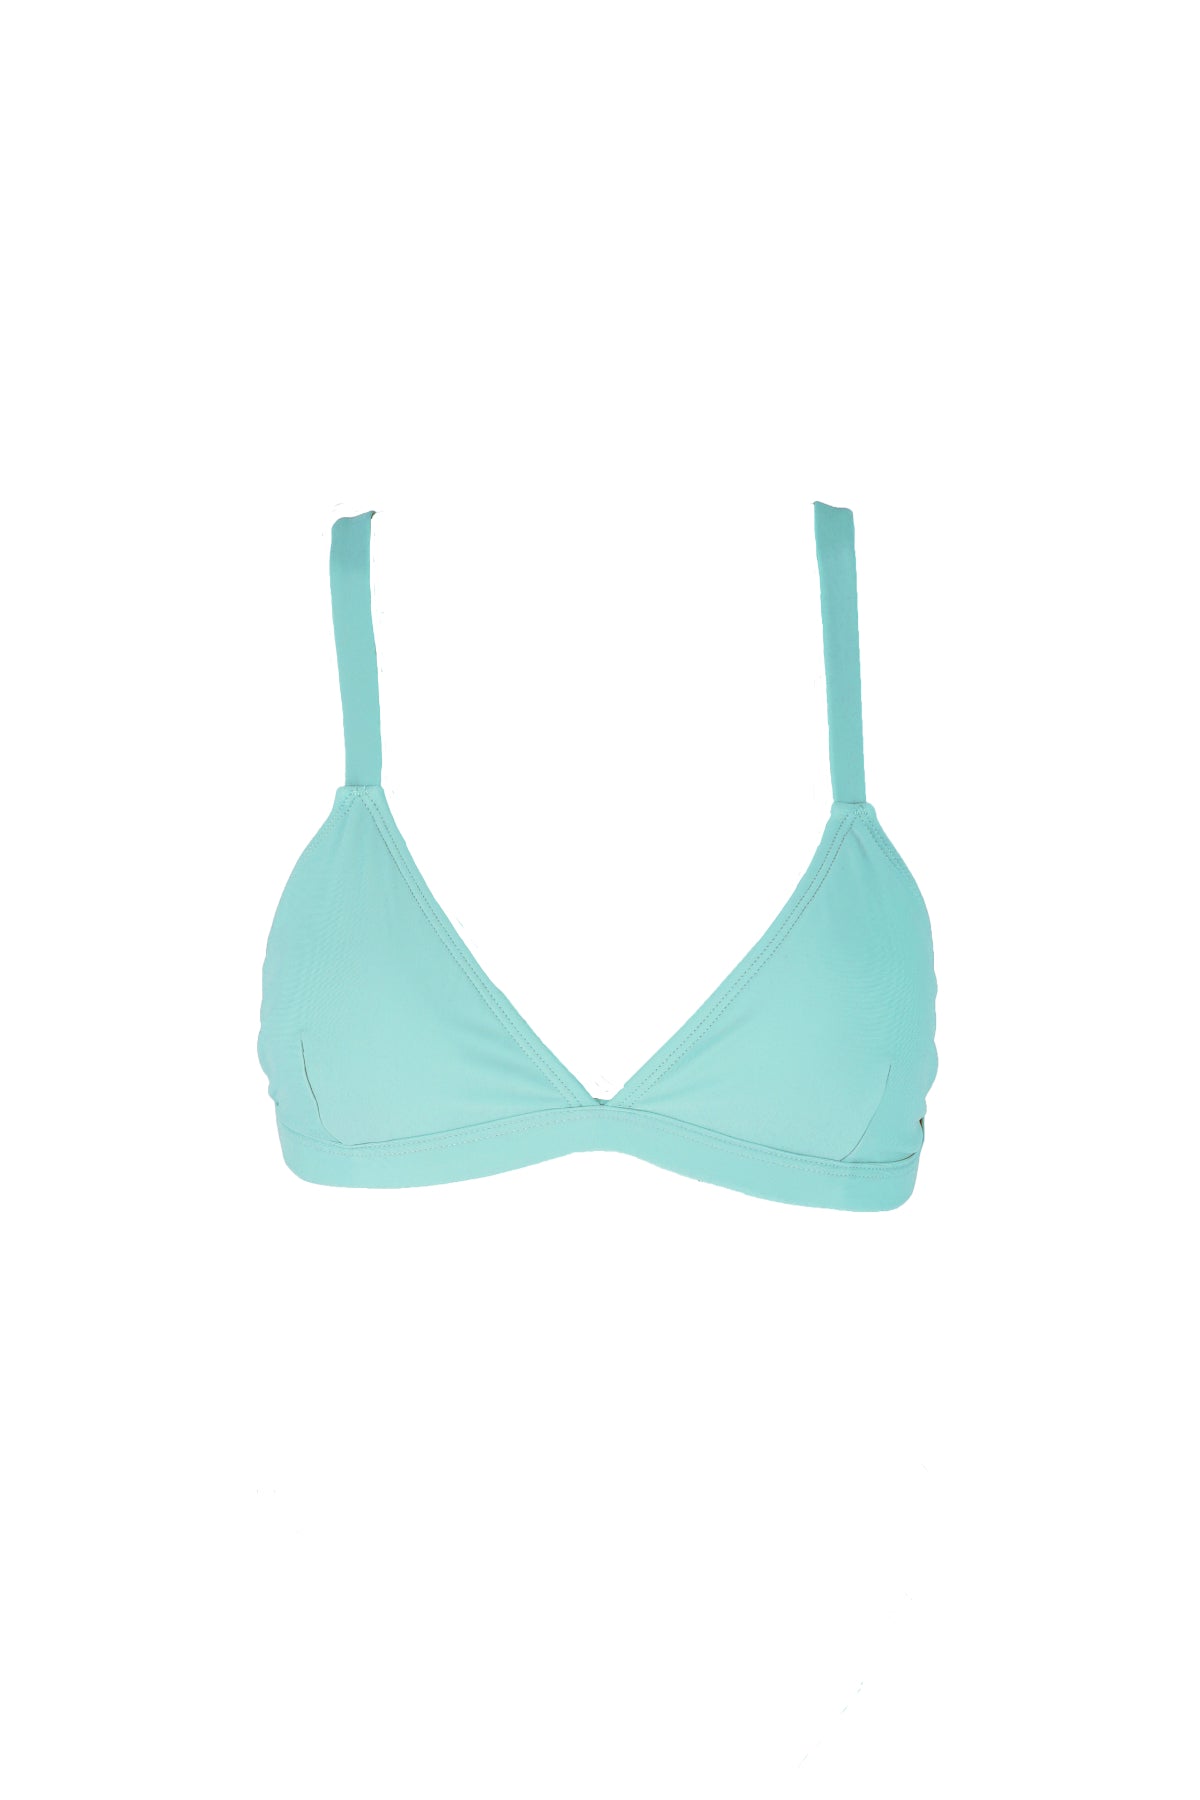 Hedy triangle bikini top in blue from luxury sustainable swimwear brand Koraru